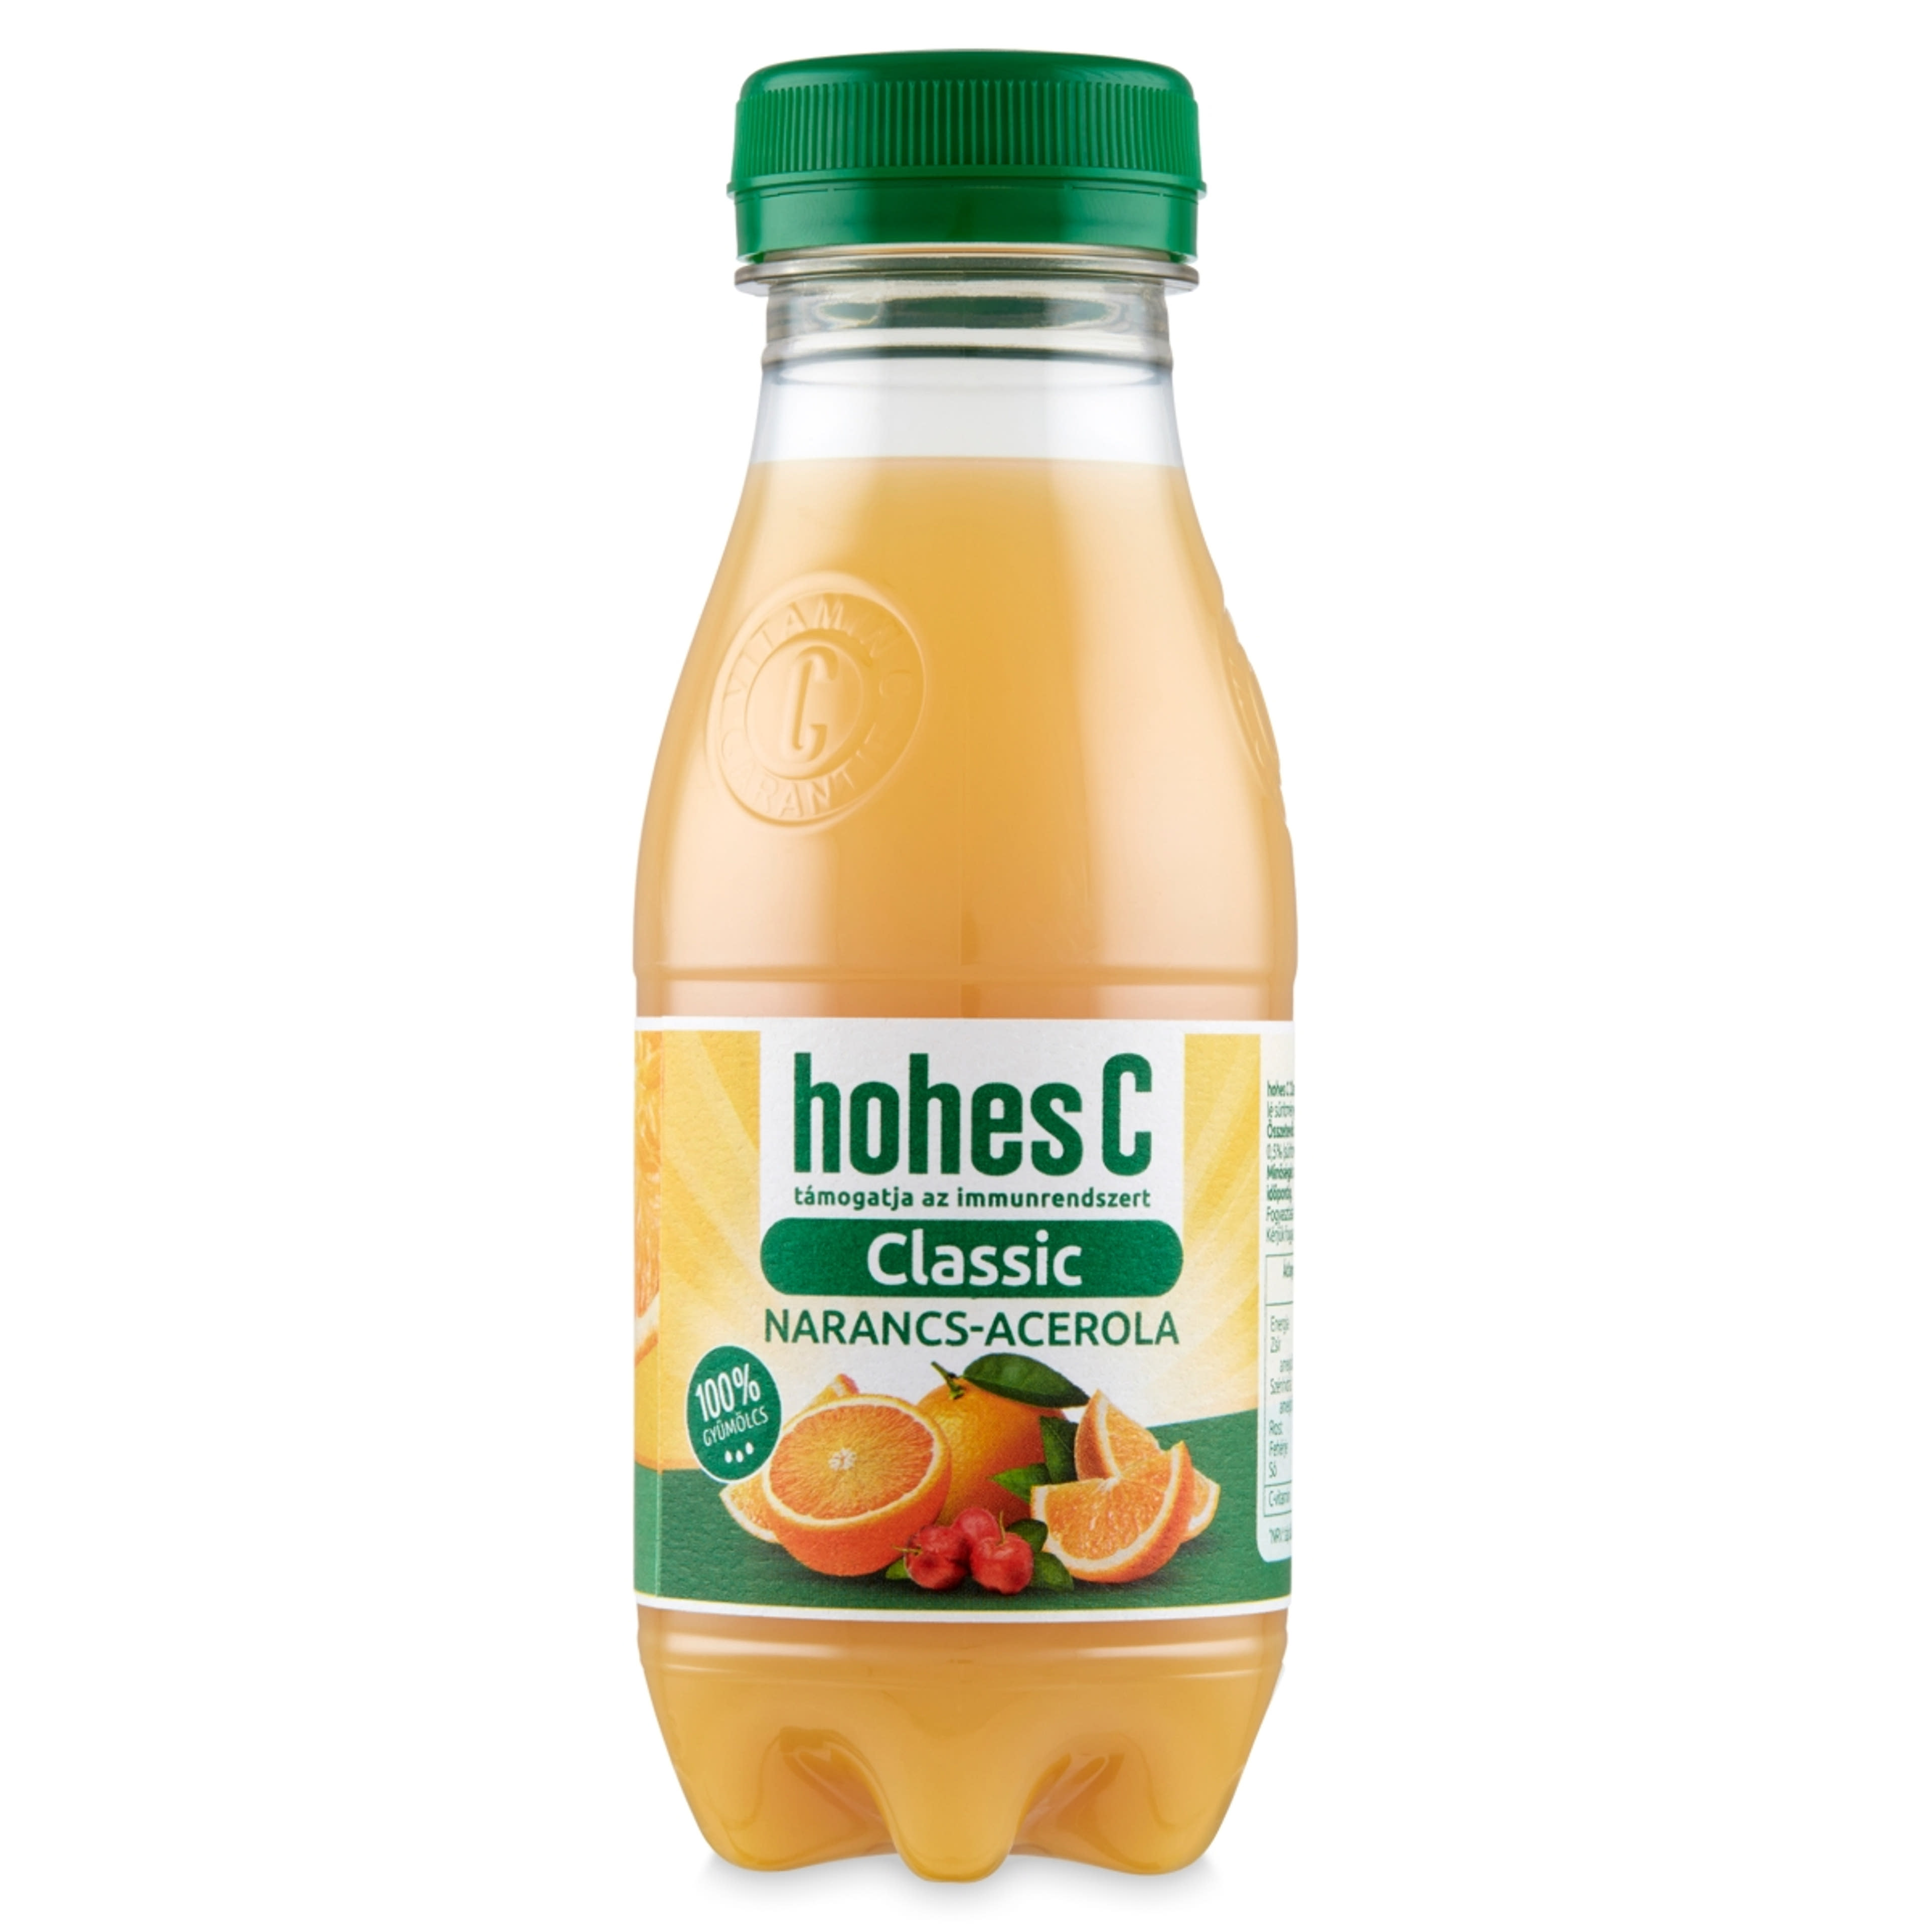 Hohes C narancs - acerola 100% - 250 ml-3